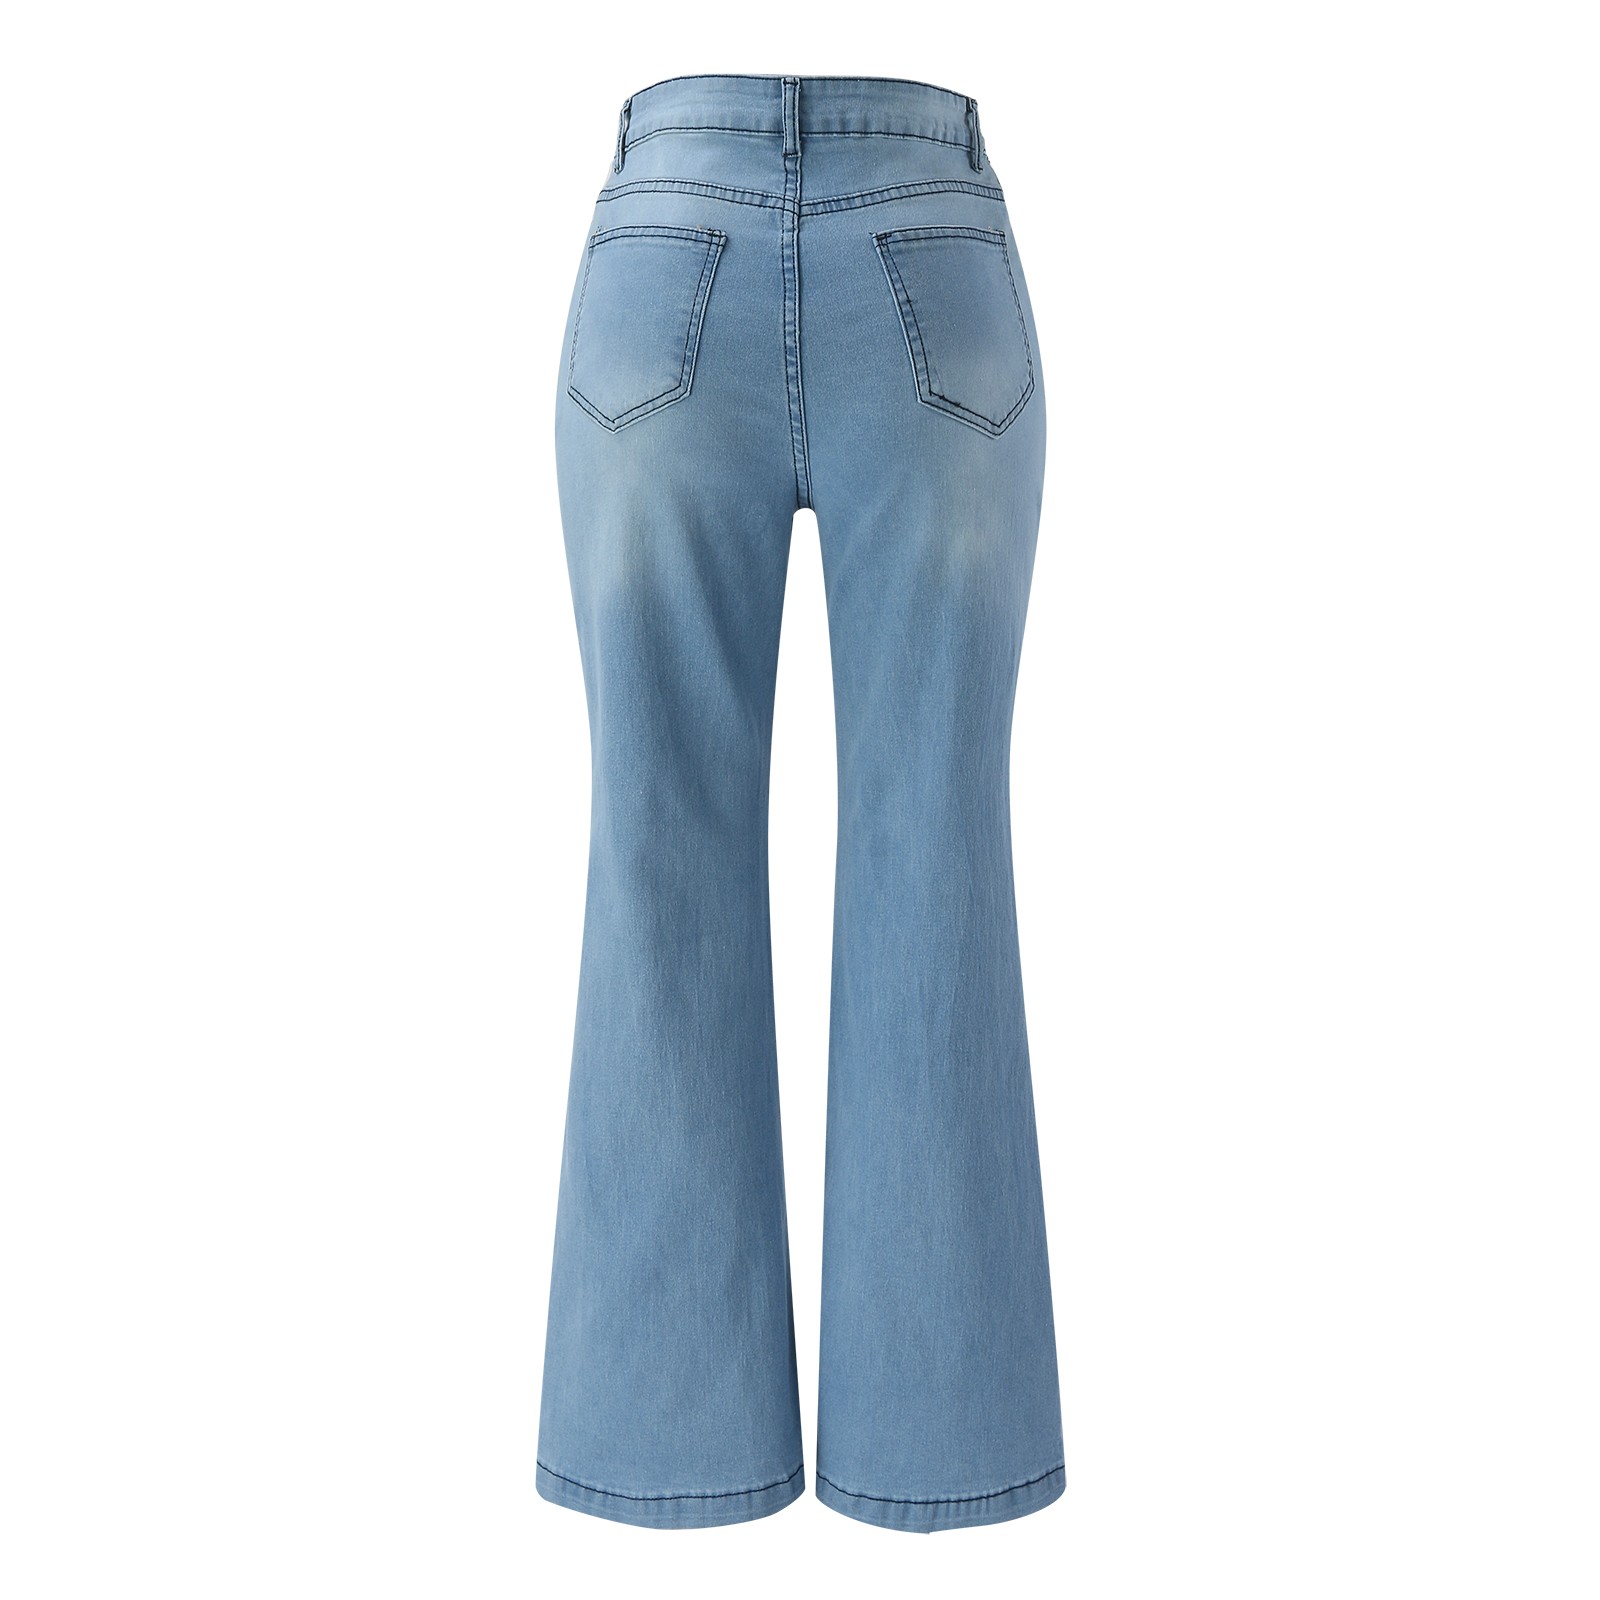 adviicd Plus Size Jeans For Women Jean for Women Stretch Loose Denim ...